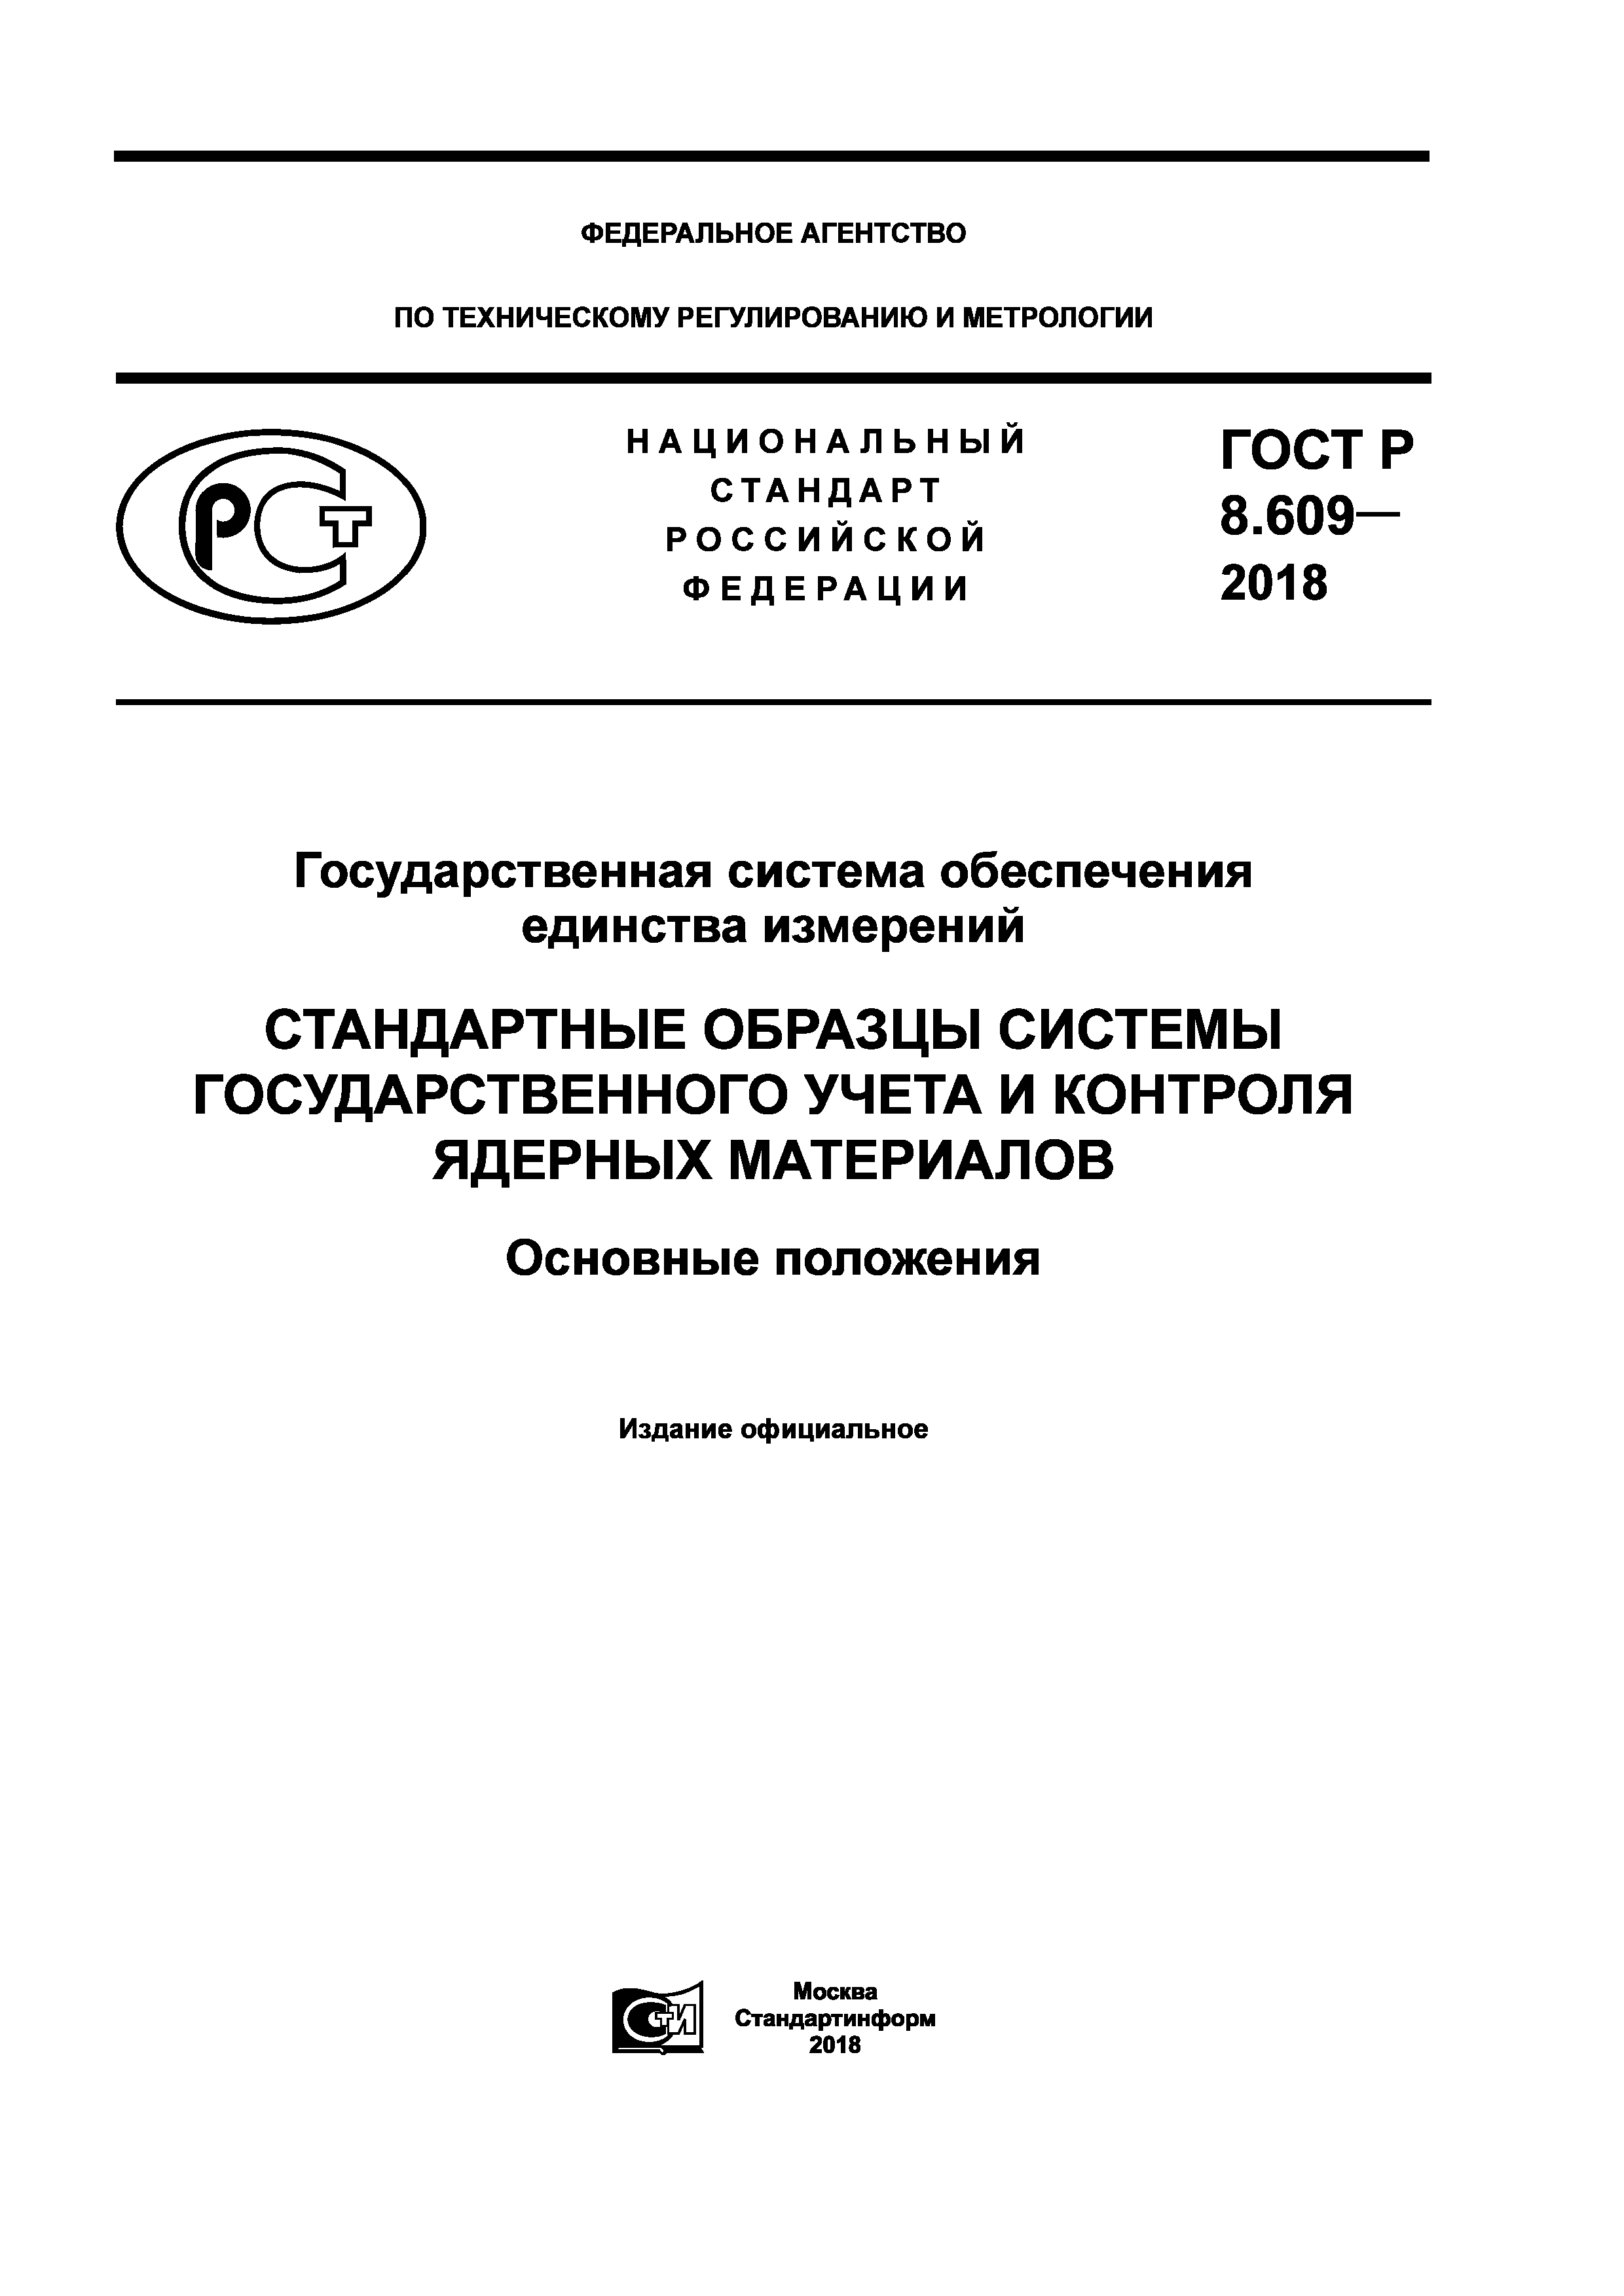 ГОСТ Р 8.609-2018